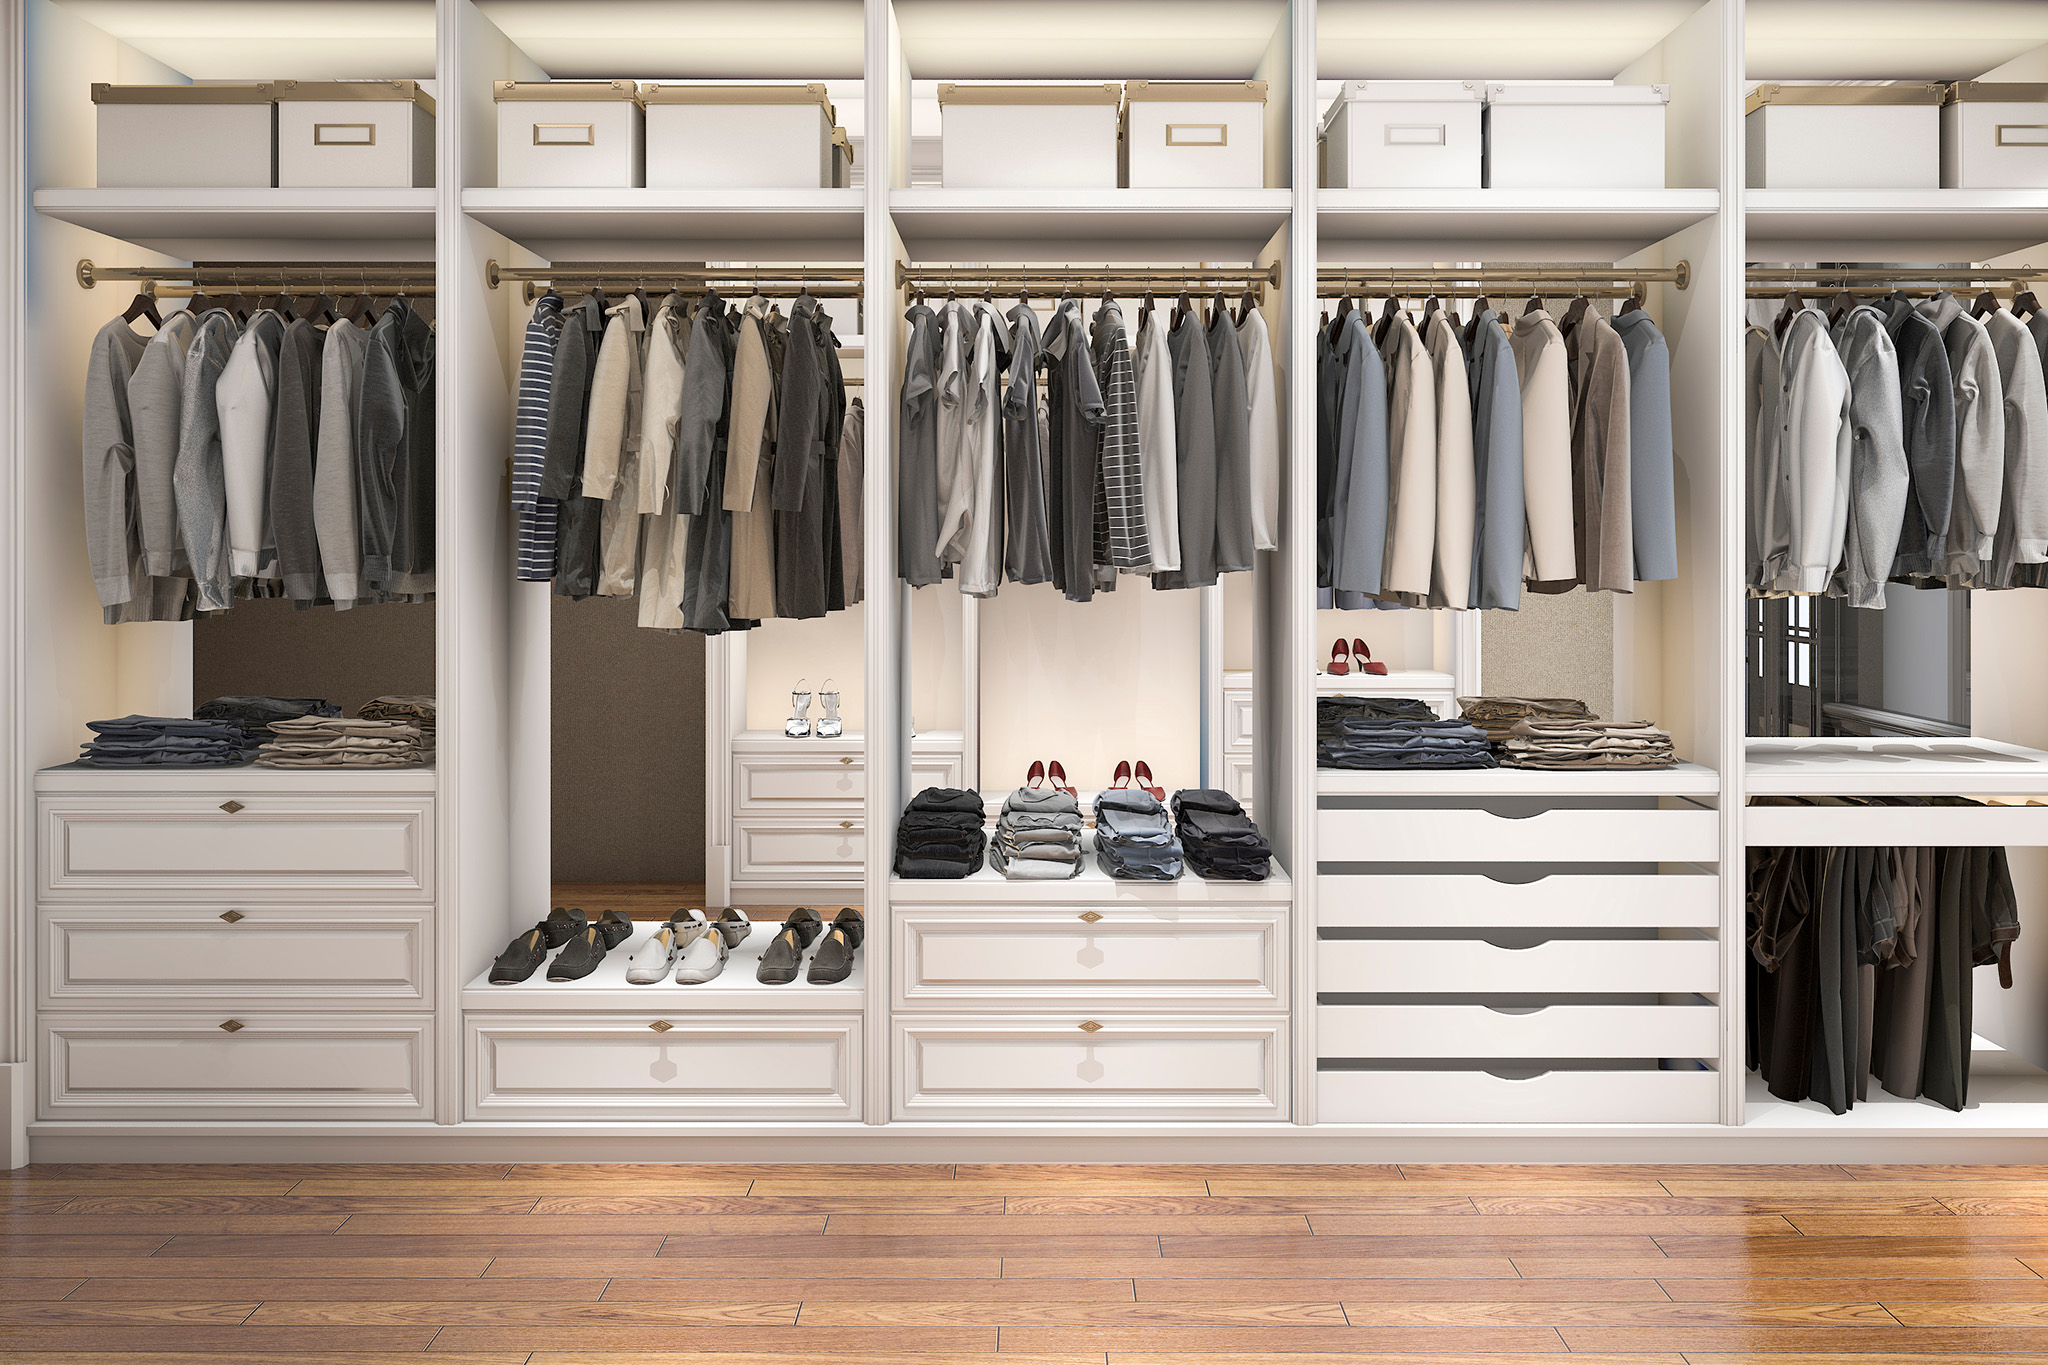 trouser rail, wardrobe interior drawers,